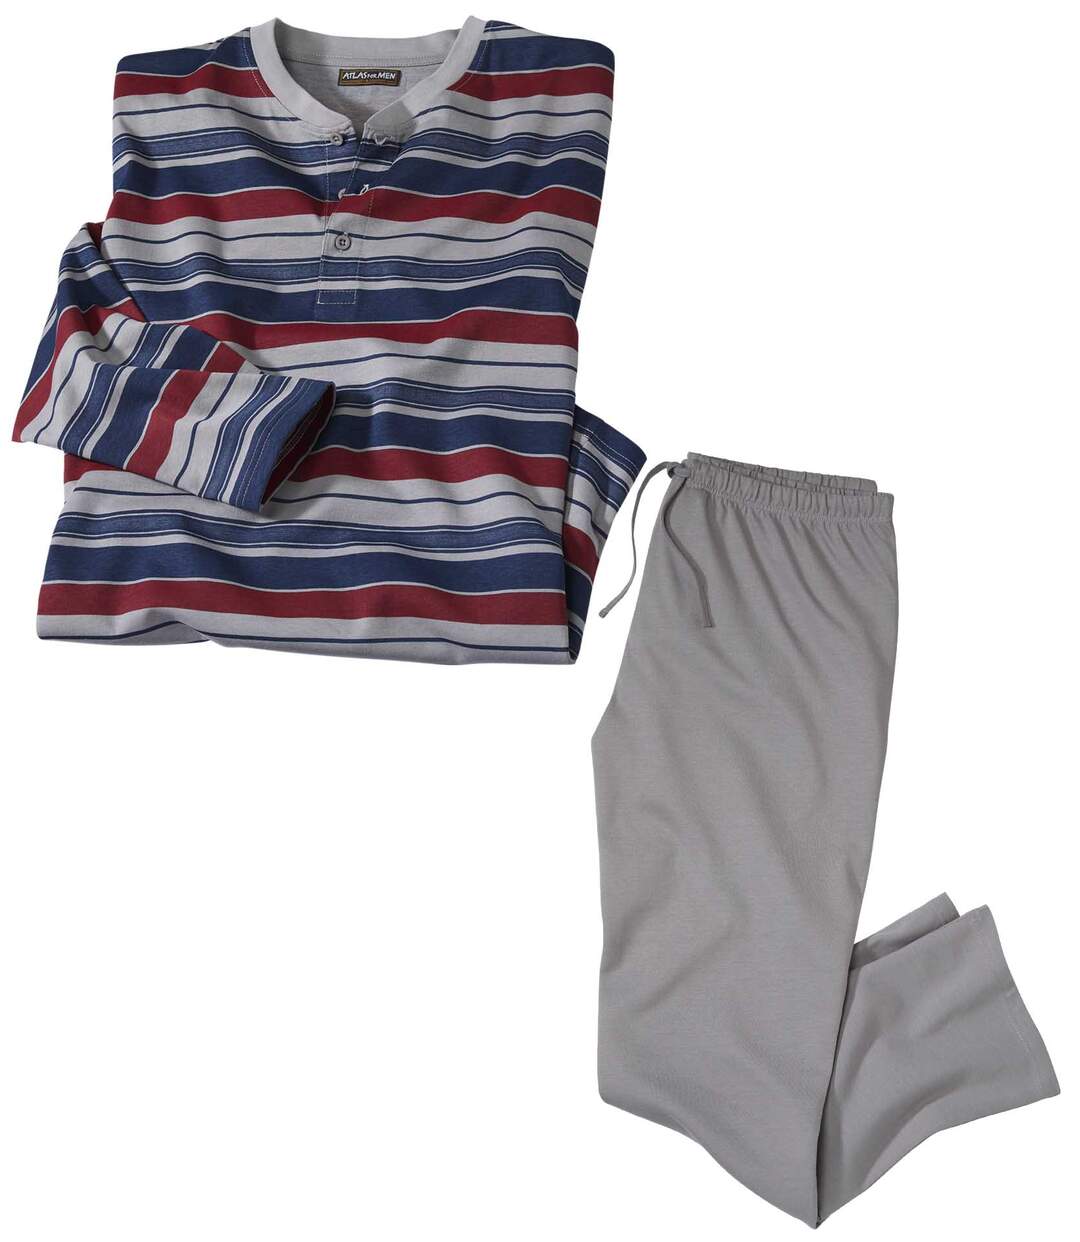 Men's Soft Cotton Striped Pajamas - Gray, Blue and Burgundy Atlas For Men